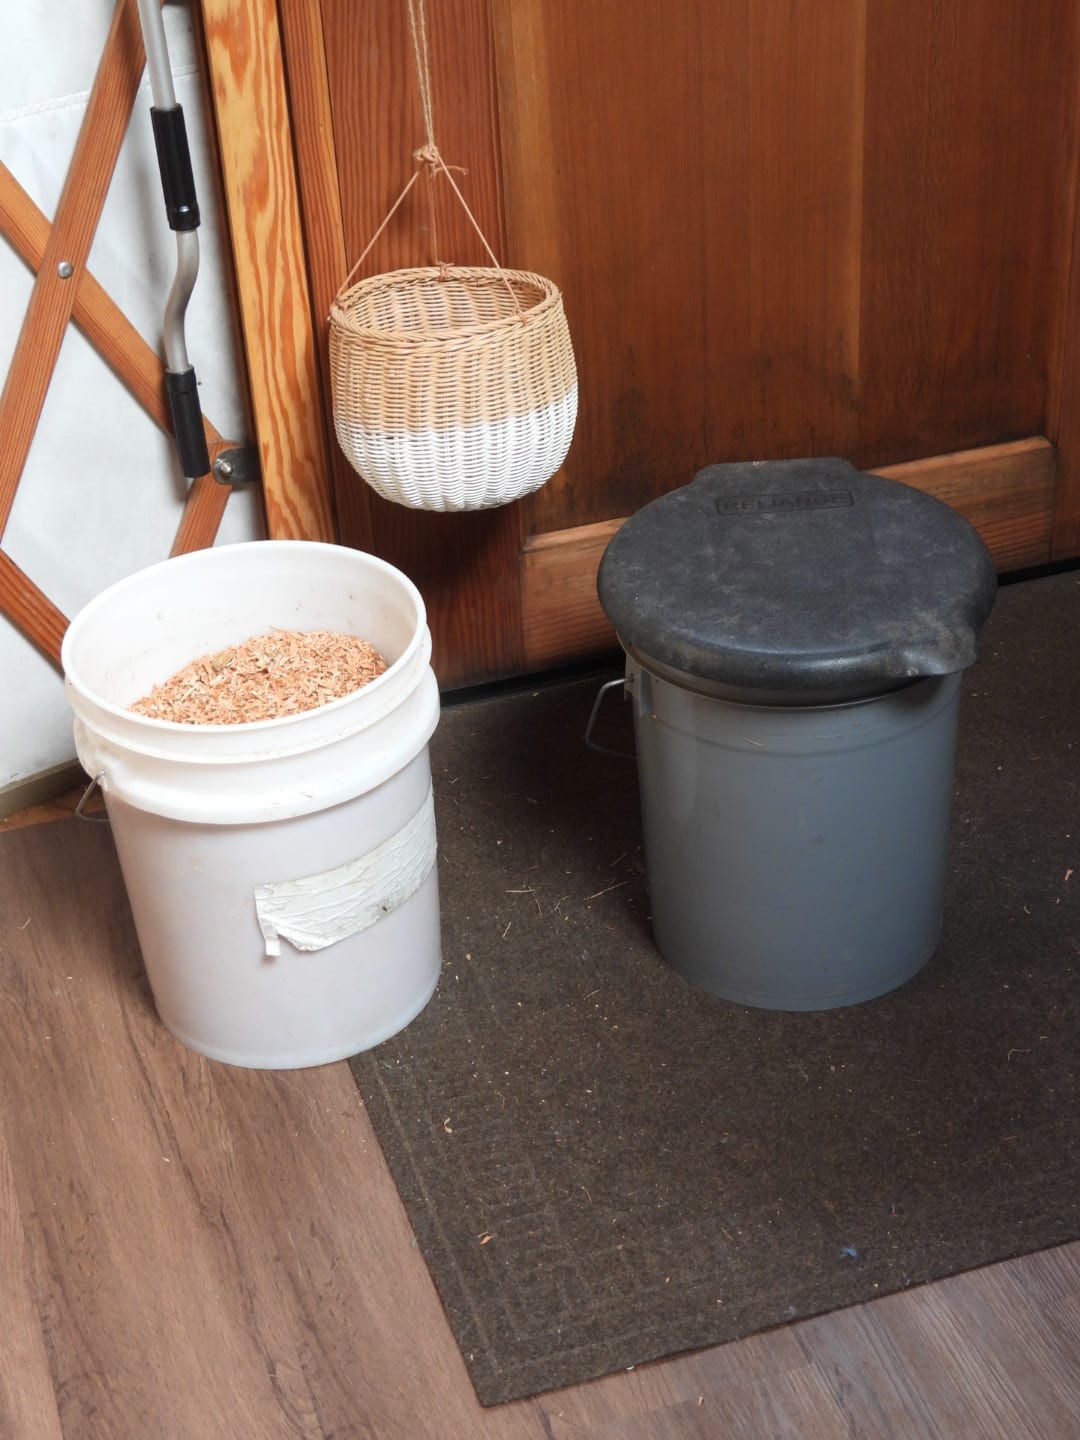 Simple sawdust composting bucket toilet.  

